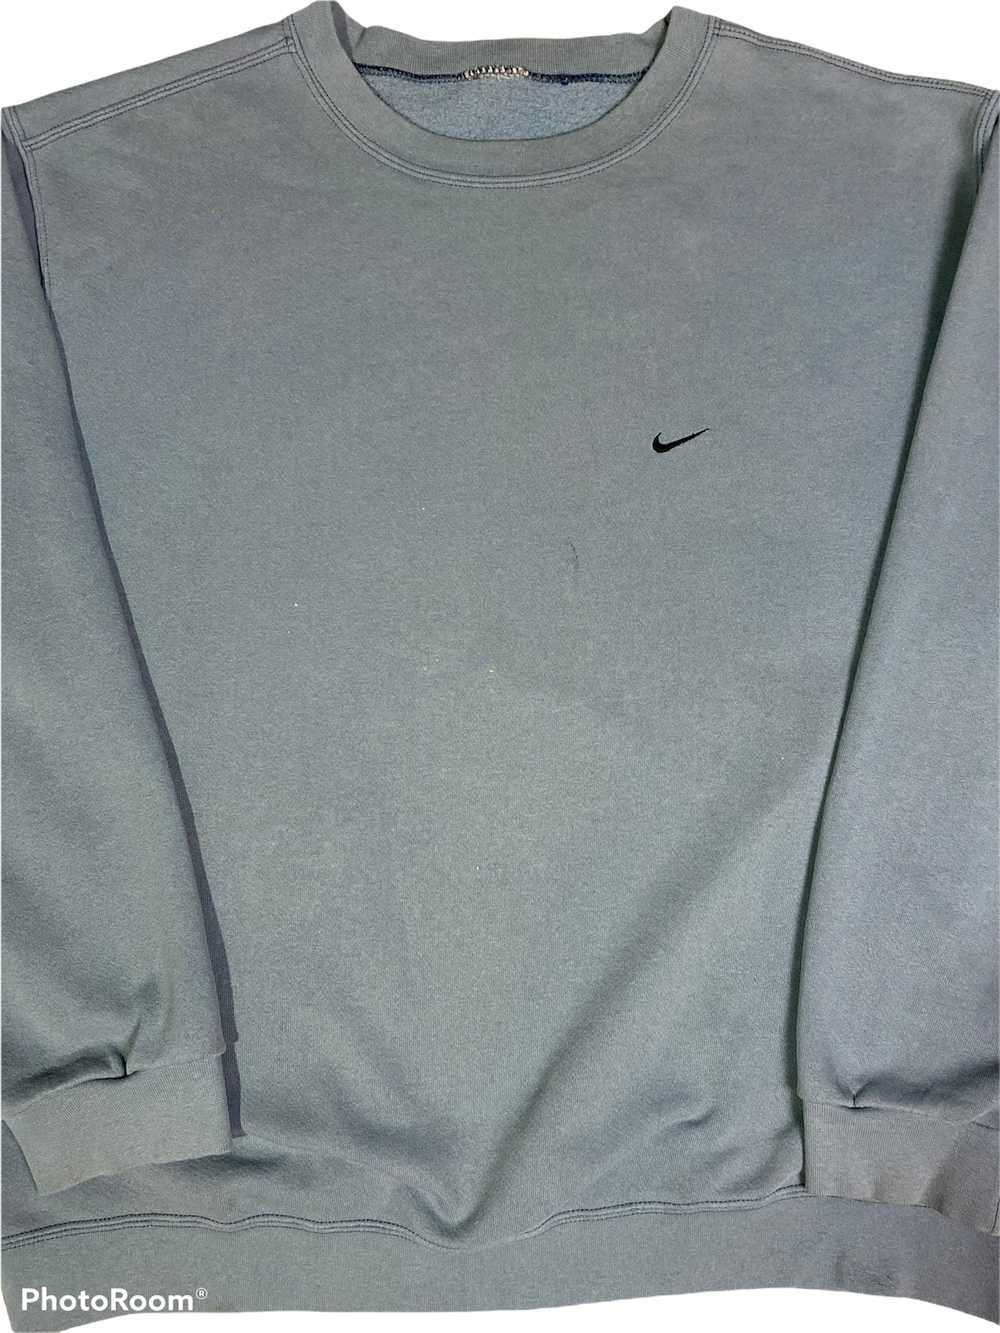 Vintage 90s Nike Baby Blue XL Sweatshirt - image 4